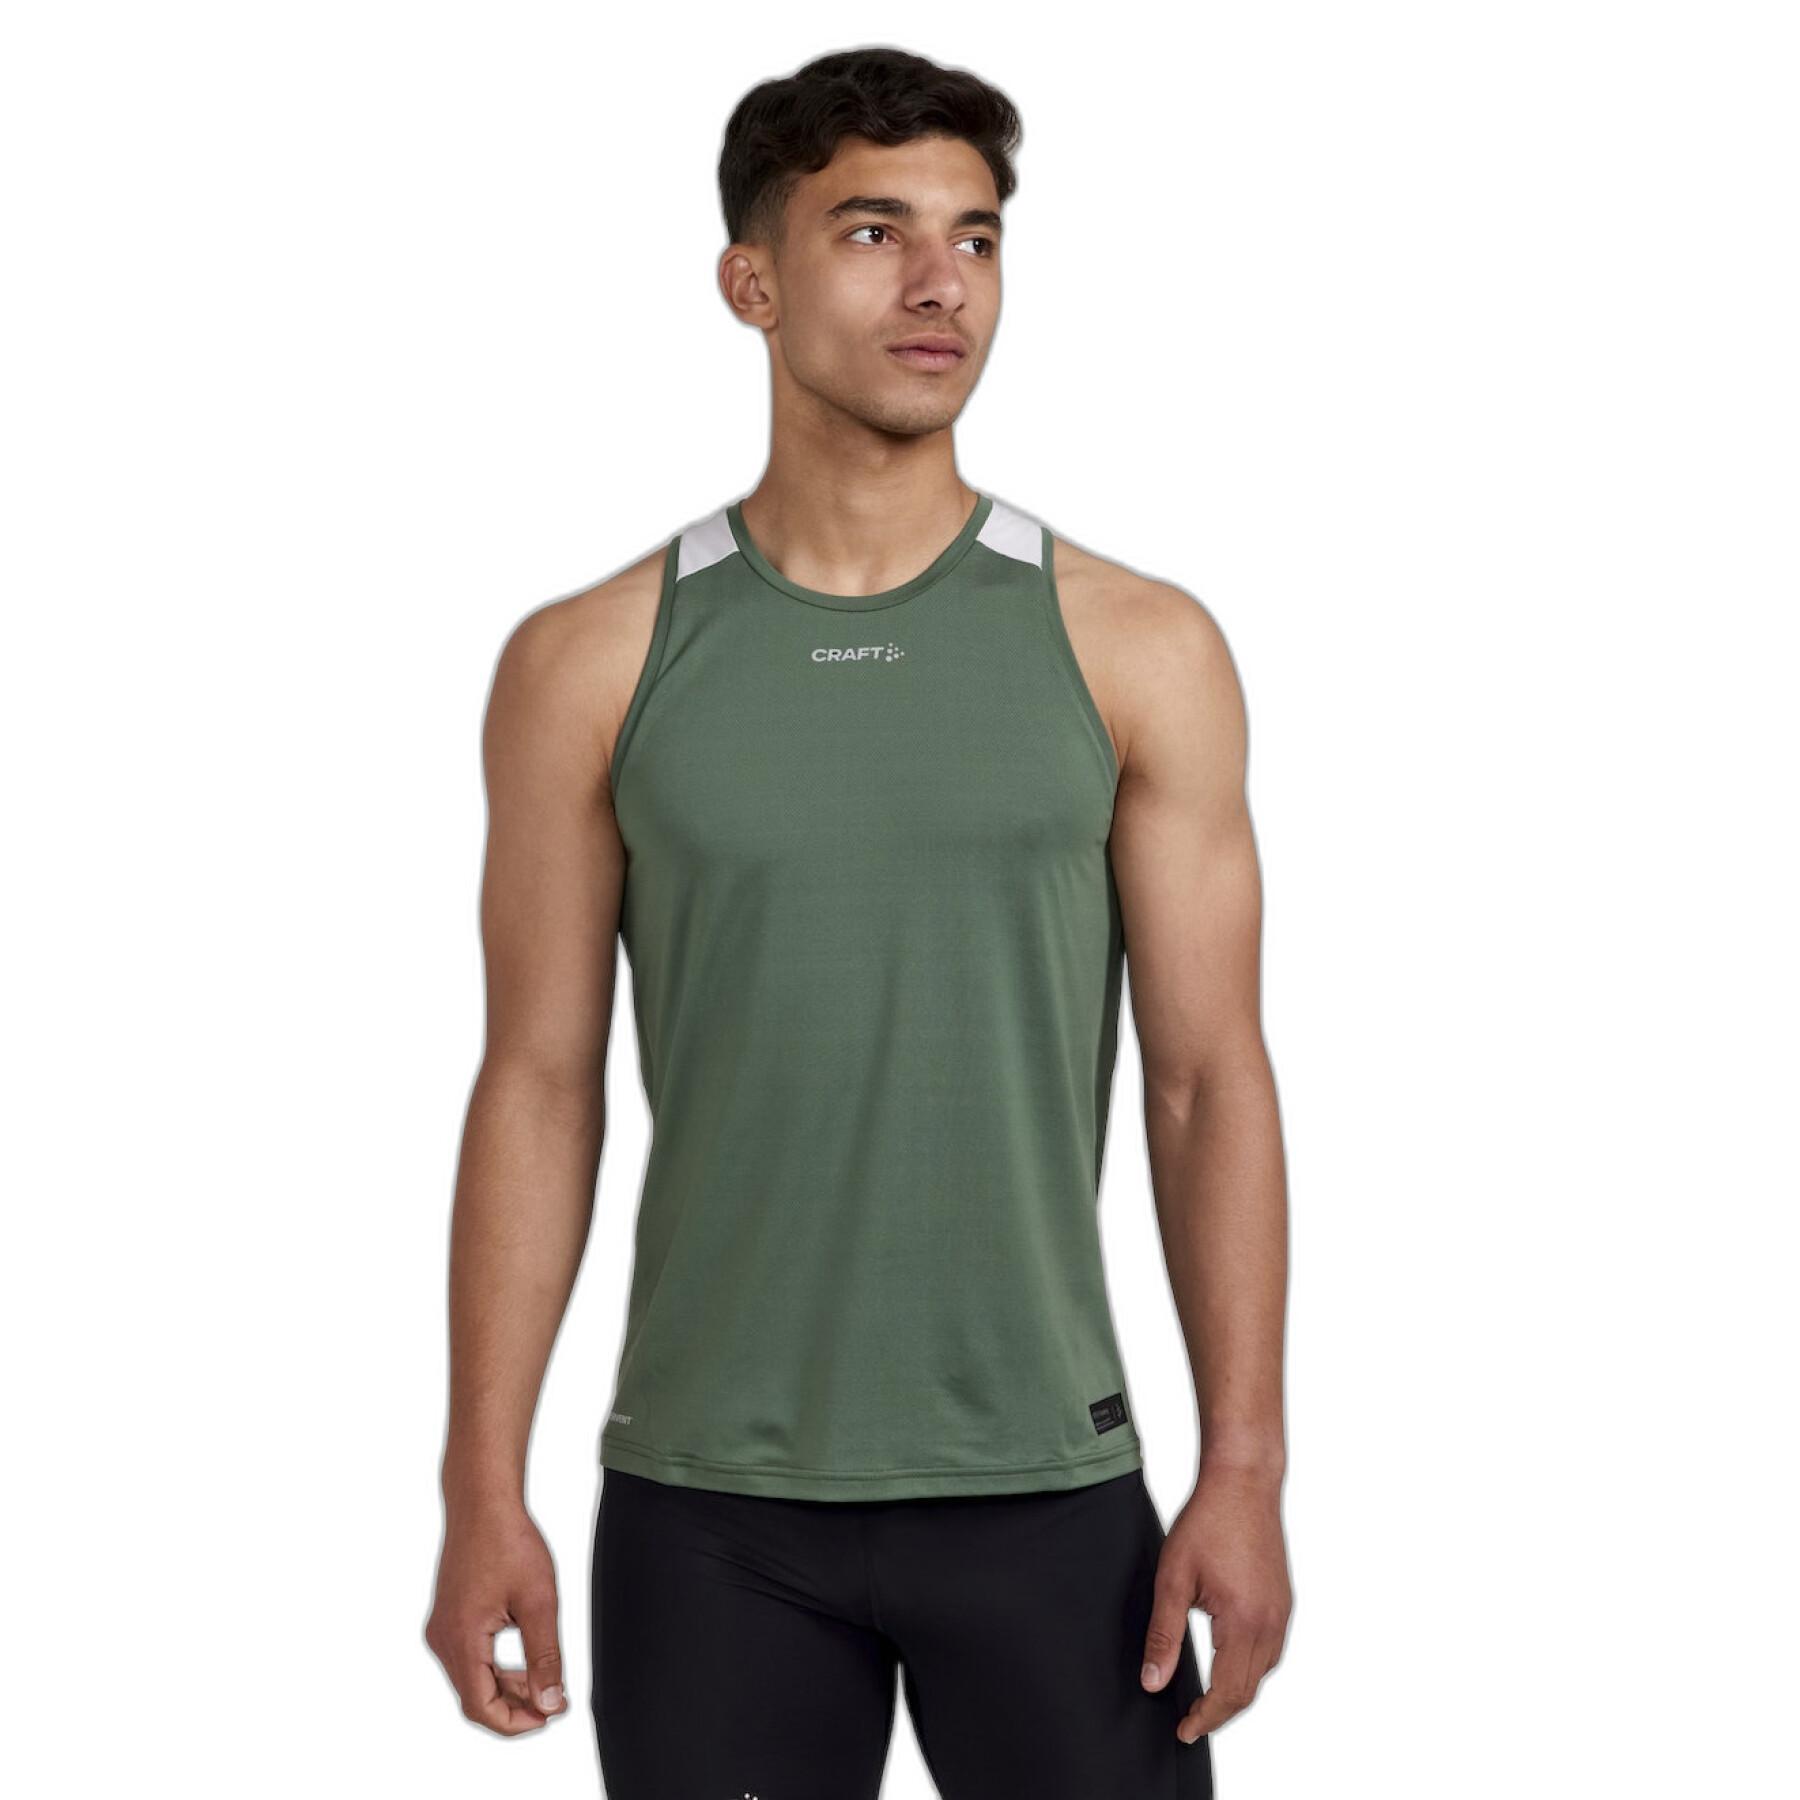 Skinne nitrogen Hare Tank top Craft Pro Hypervent Singlet - T-shirts - Men's Clothing - Fitness